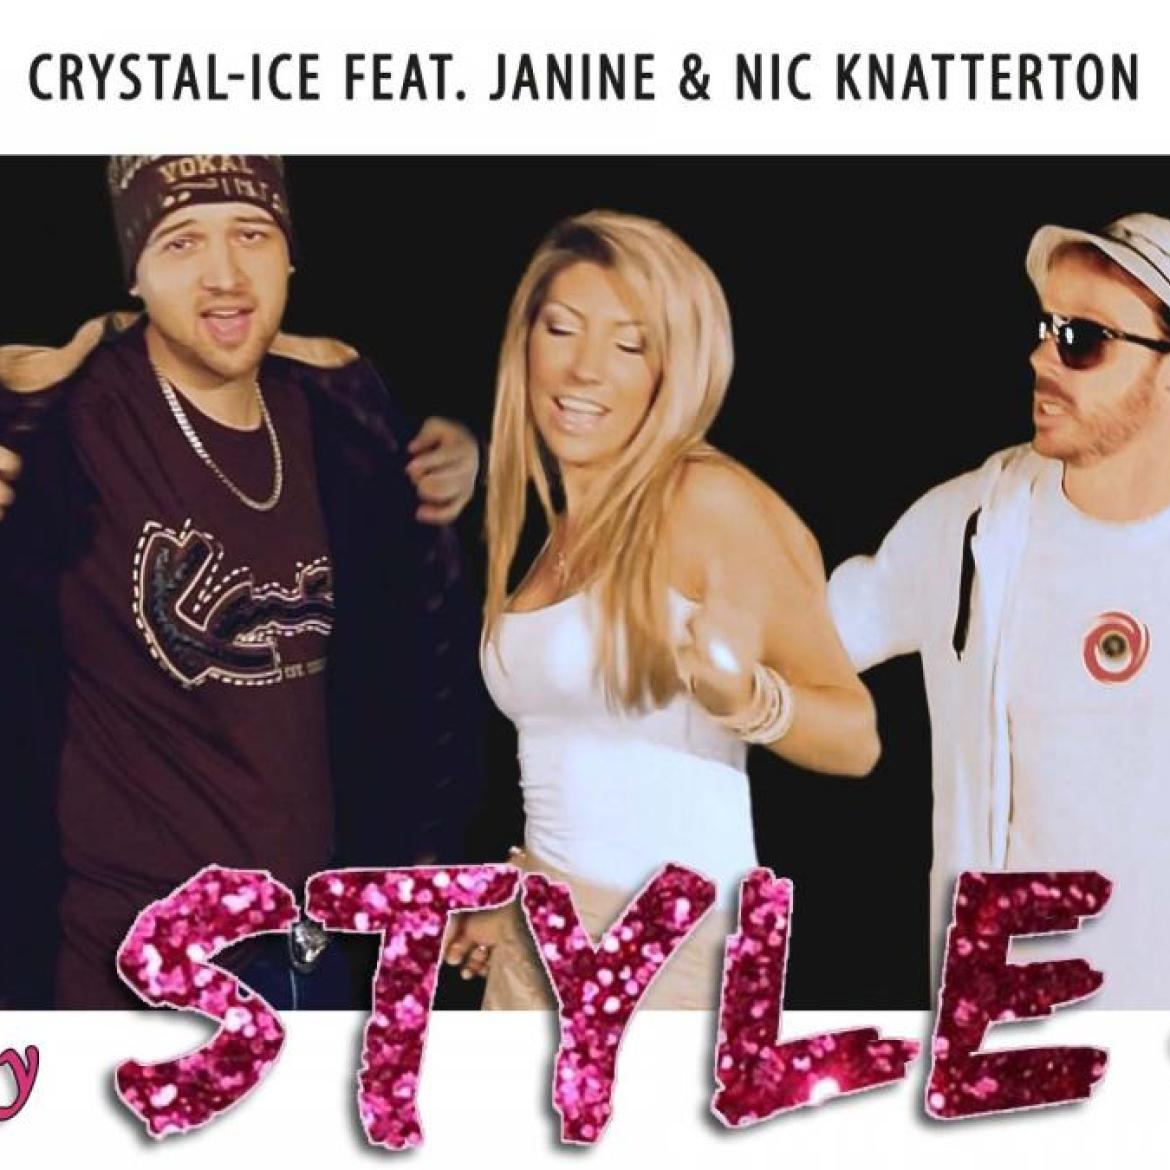 Crystal-Ice feat. Janine & Nic Knatterton - Like My Style [Musikvideo] [Crystyle]